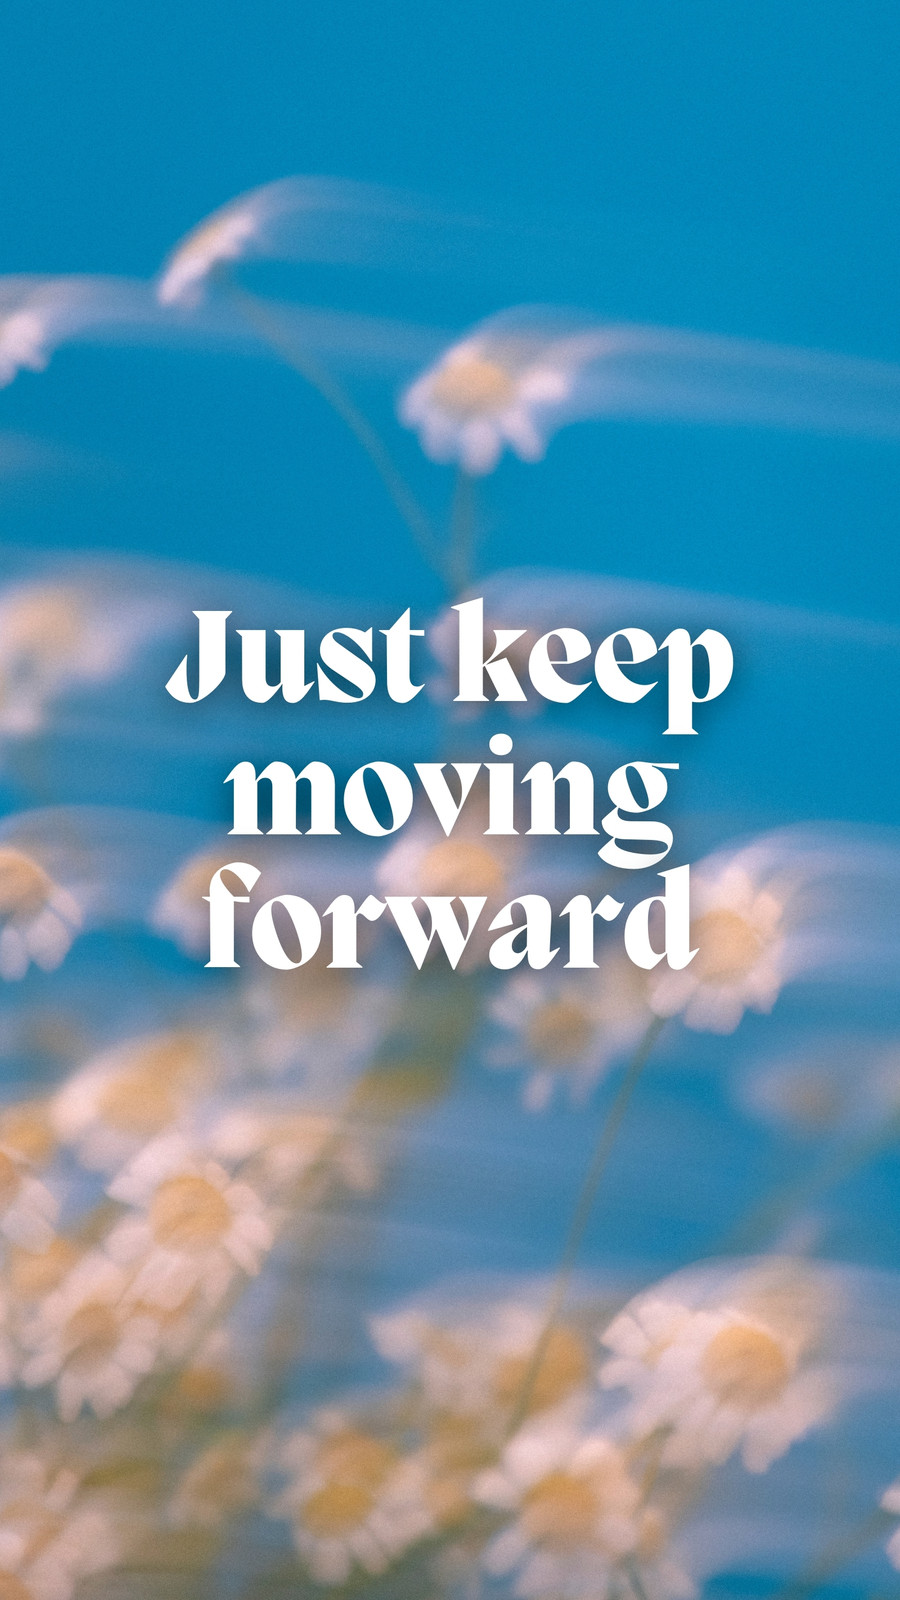 Walt Disney Quote: “Keep Moving Forward.”